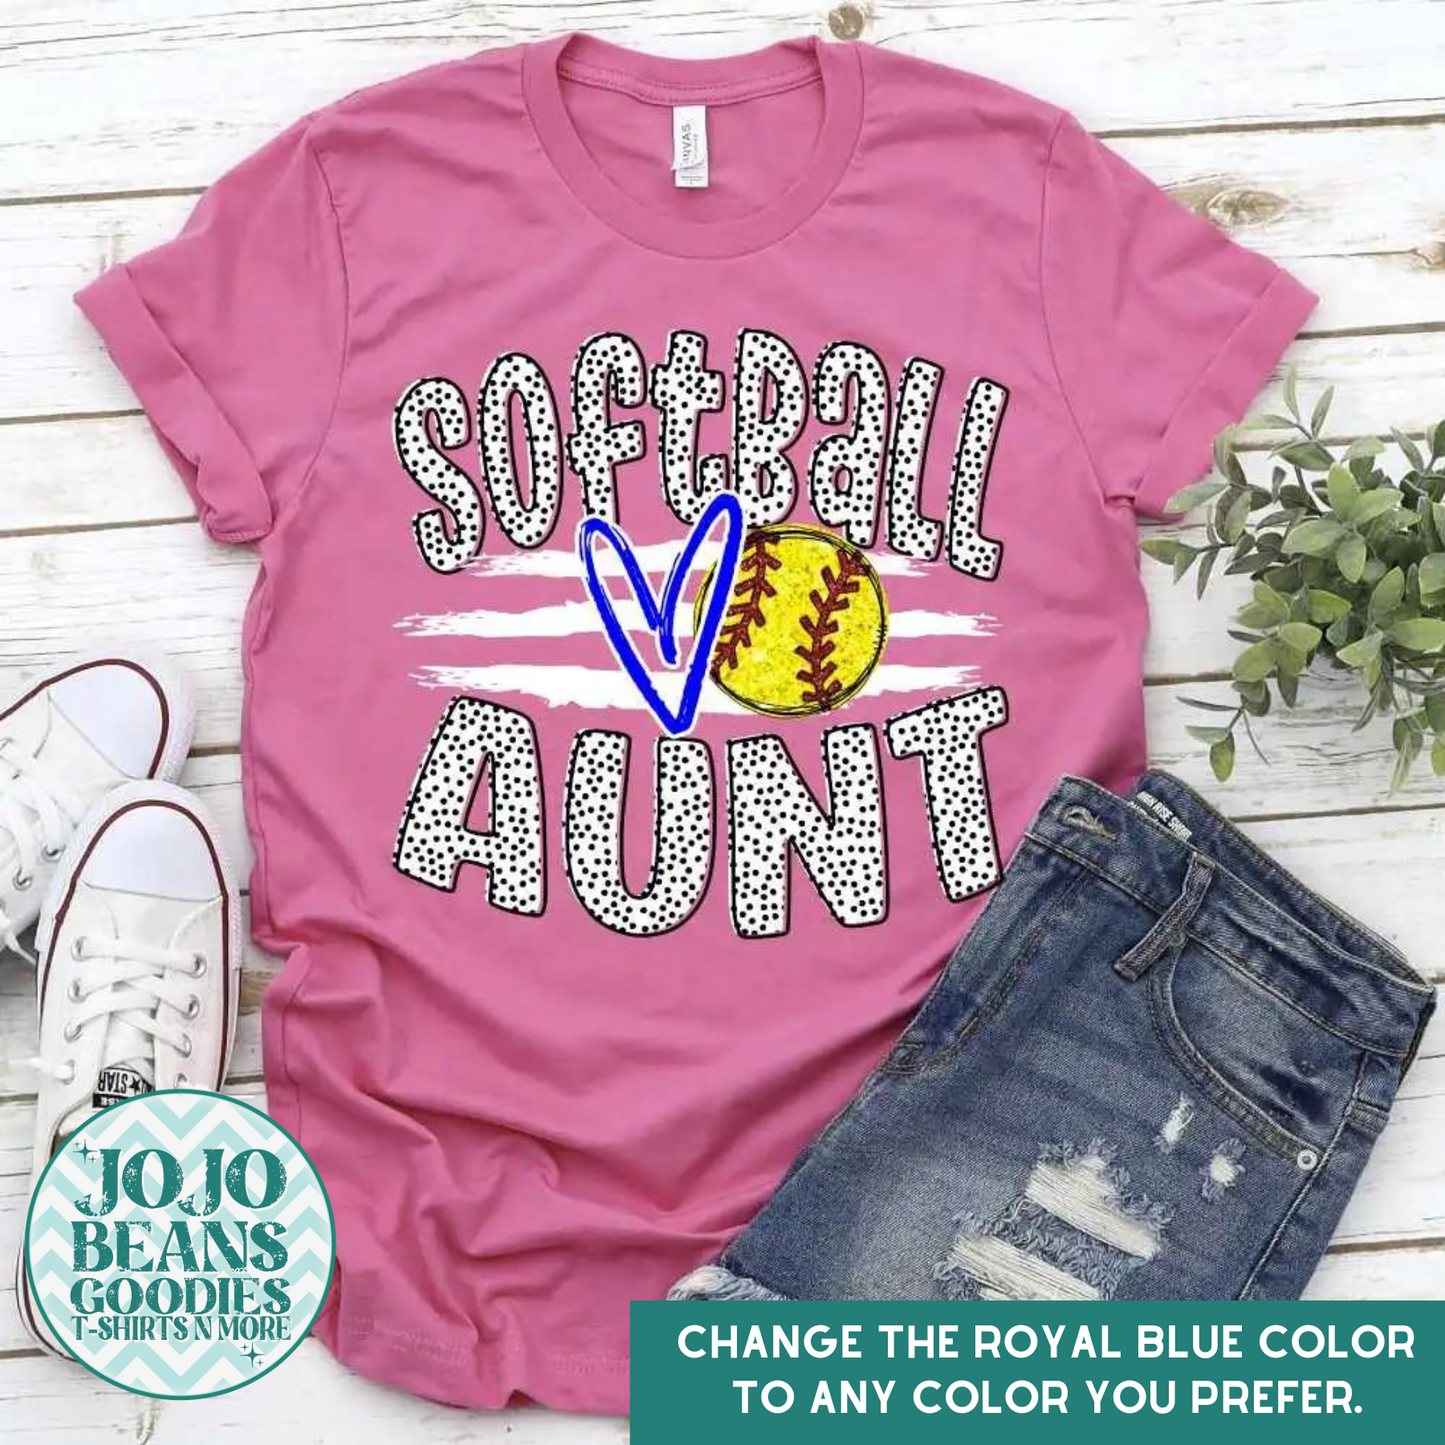 Softball Aunt - Ball & Stripes - Customize